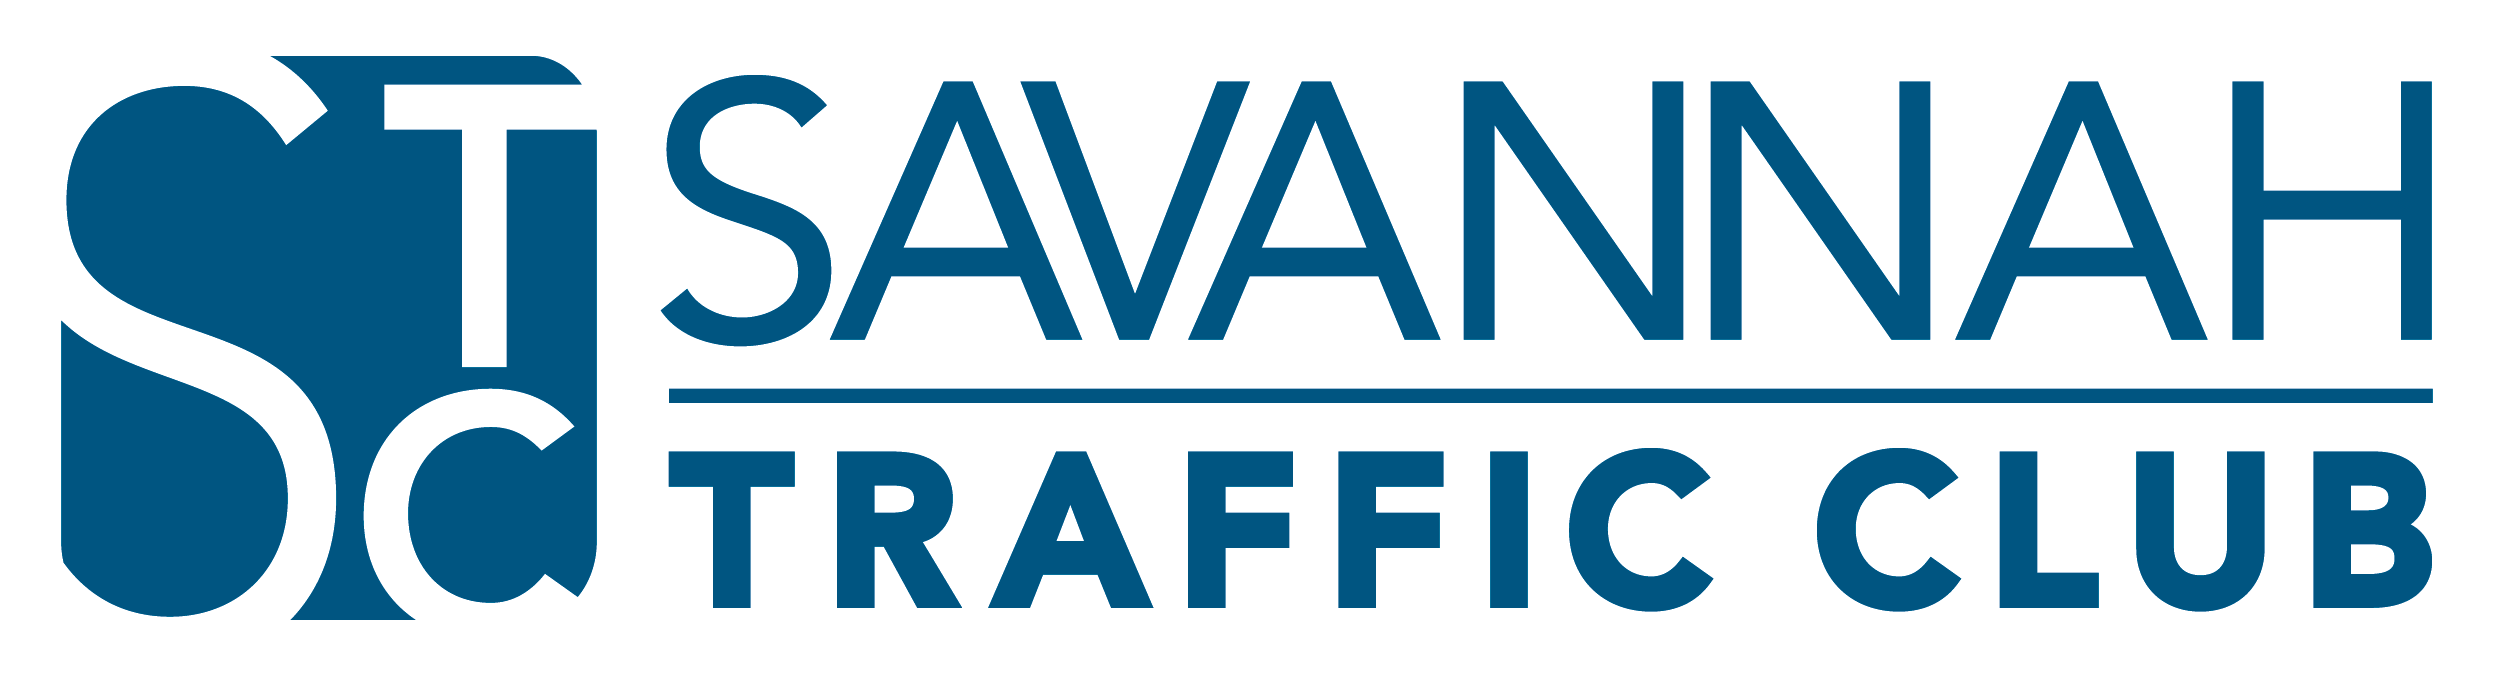 Savannah Traffic Club